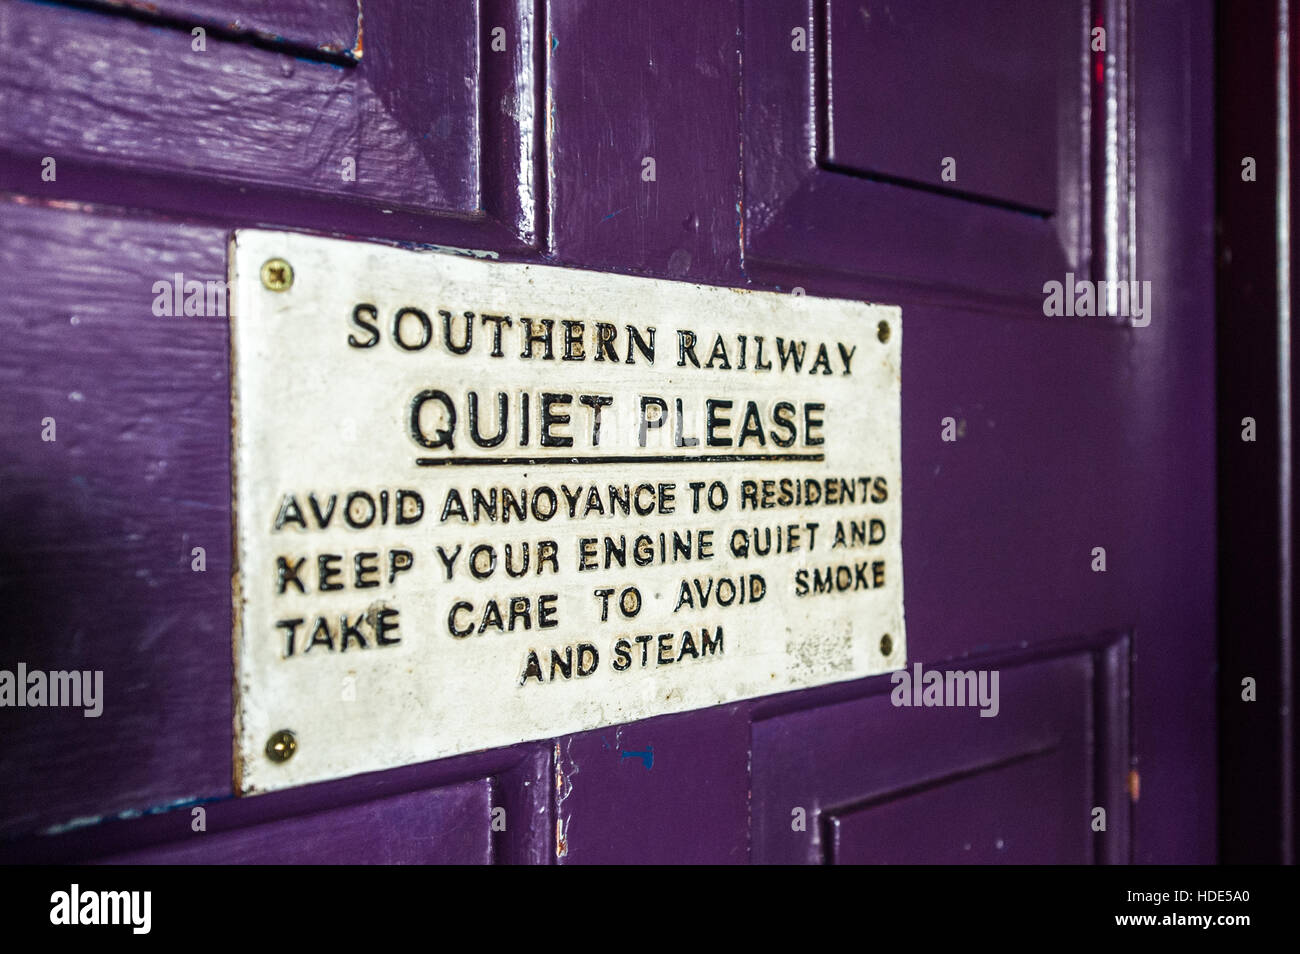 Southern Railway 'Quiet Please' sign on a purple door. Stock Photo